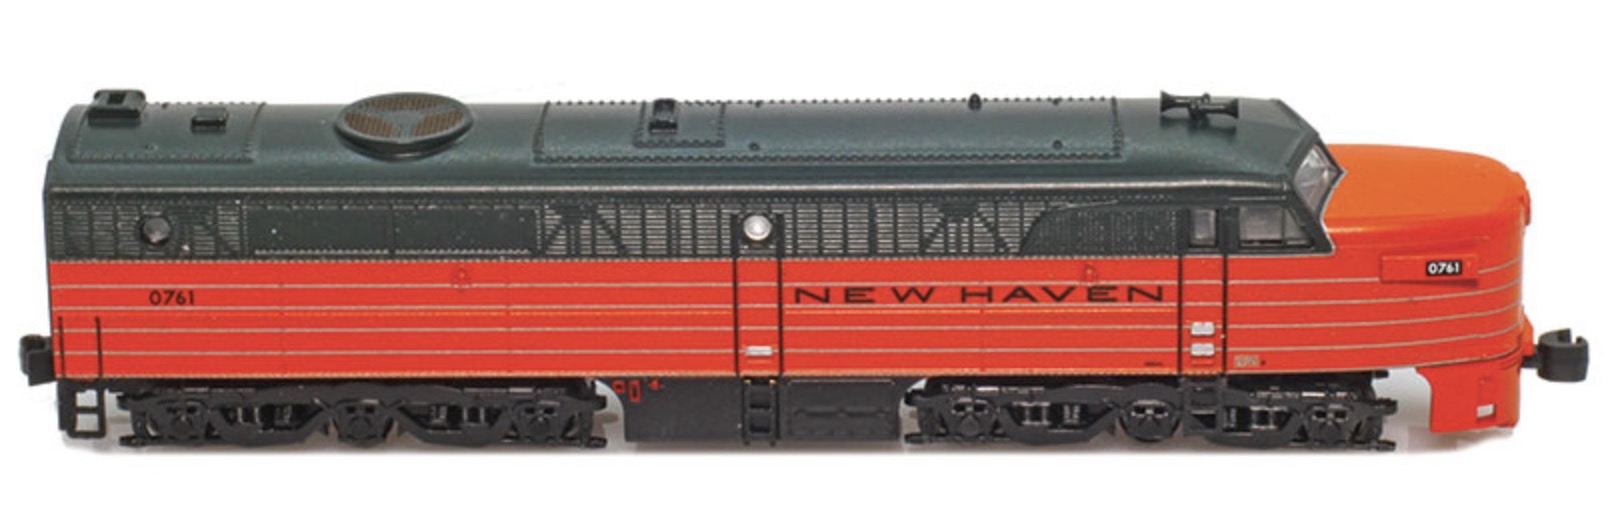 Z Scale - AZL - 64425-1 - Locomotive, Diesel, Alco PA/PB - New Haven - 760